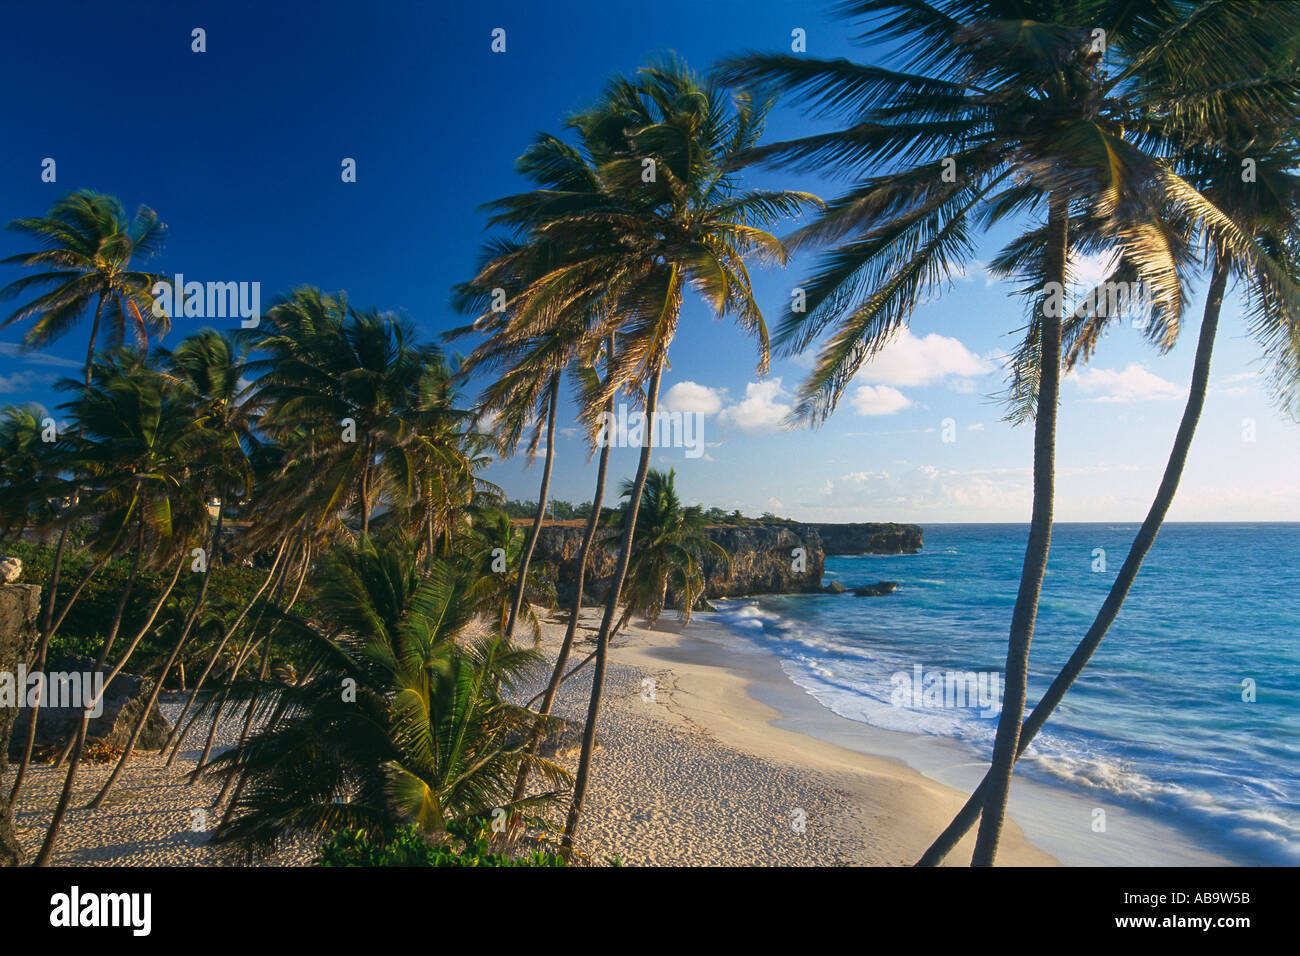 palm trees at Bottom Bay South East Coast Barbados Stock Photo